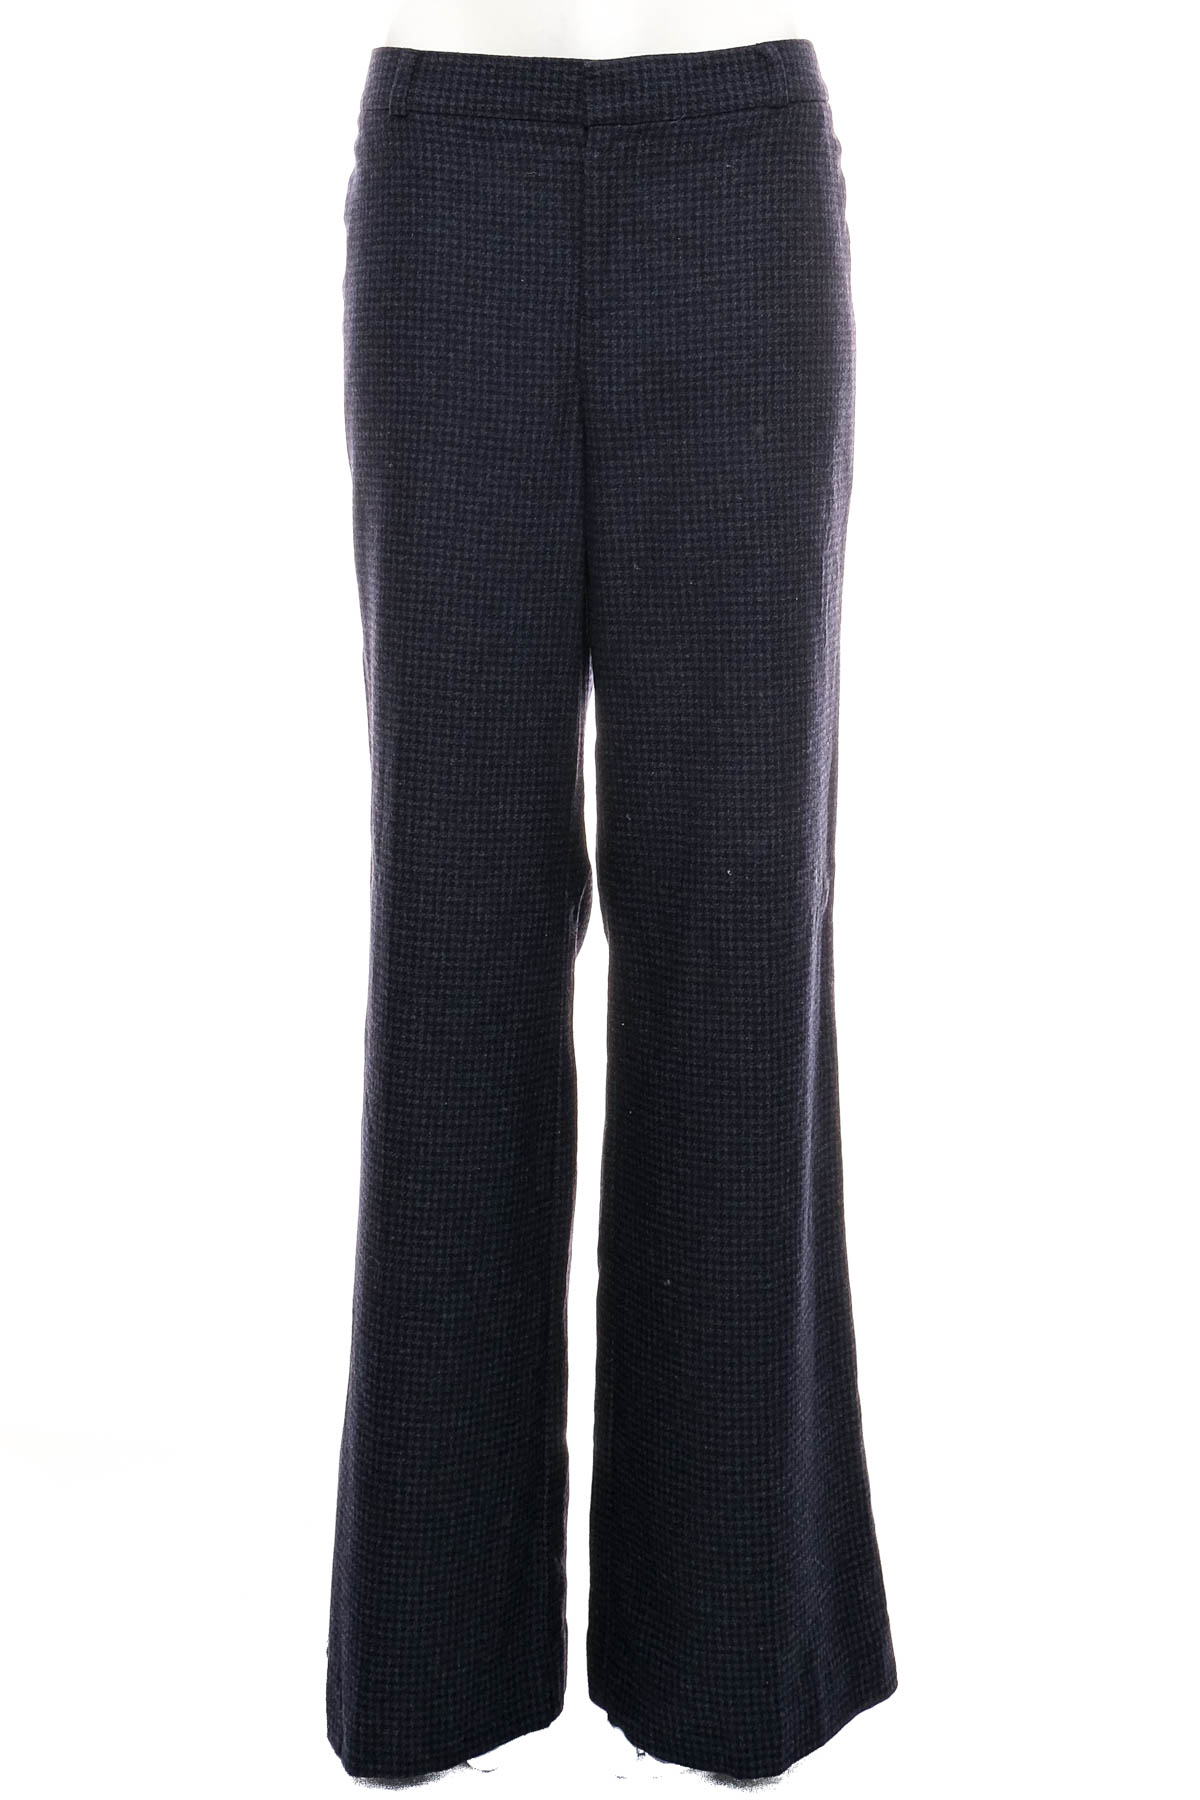 Pantaloni de damă - BANANA REPUBLIC - 0